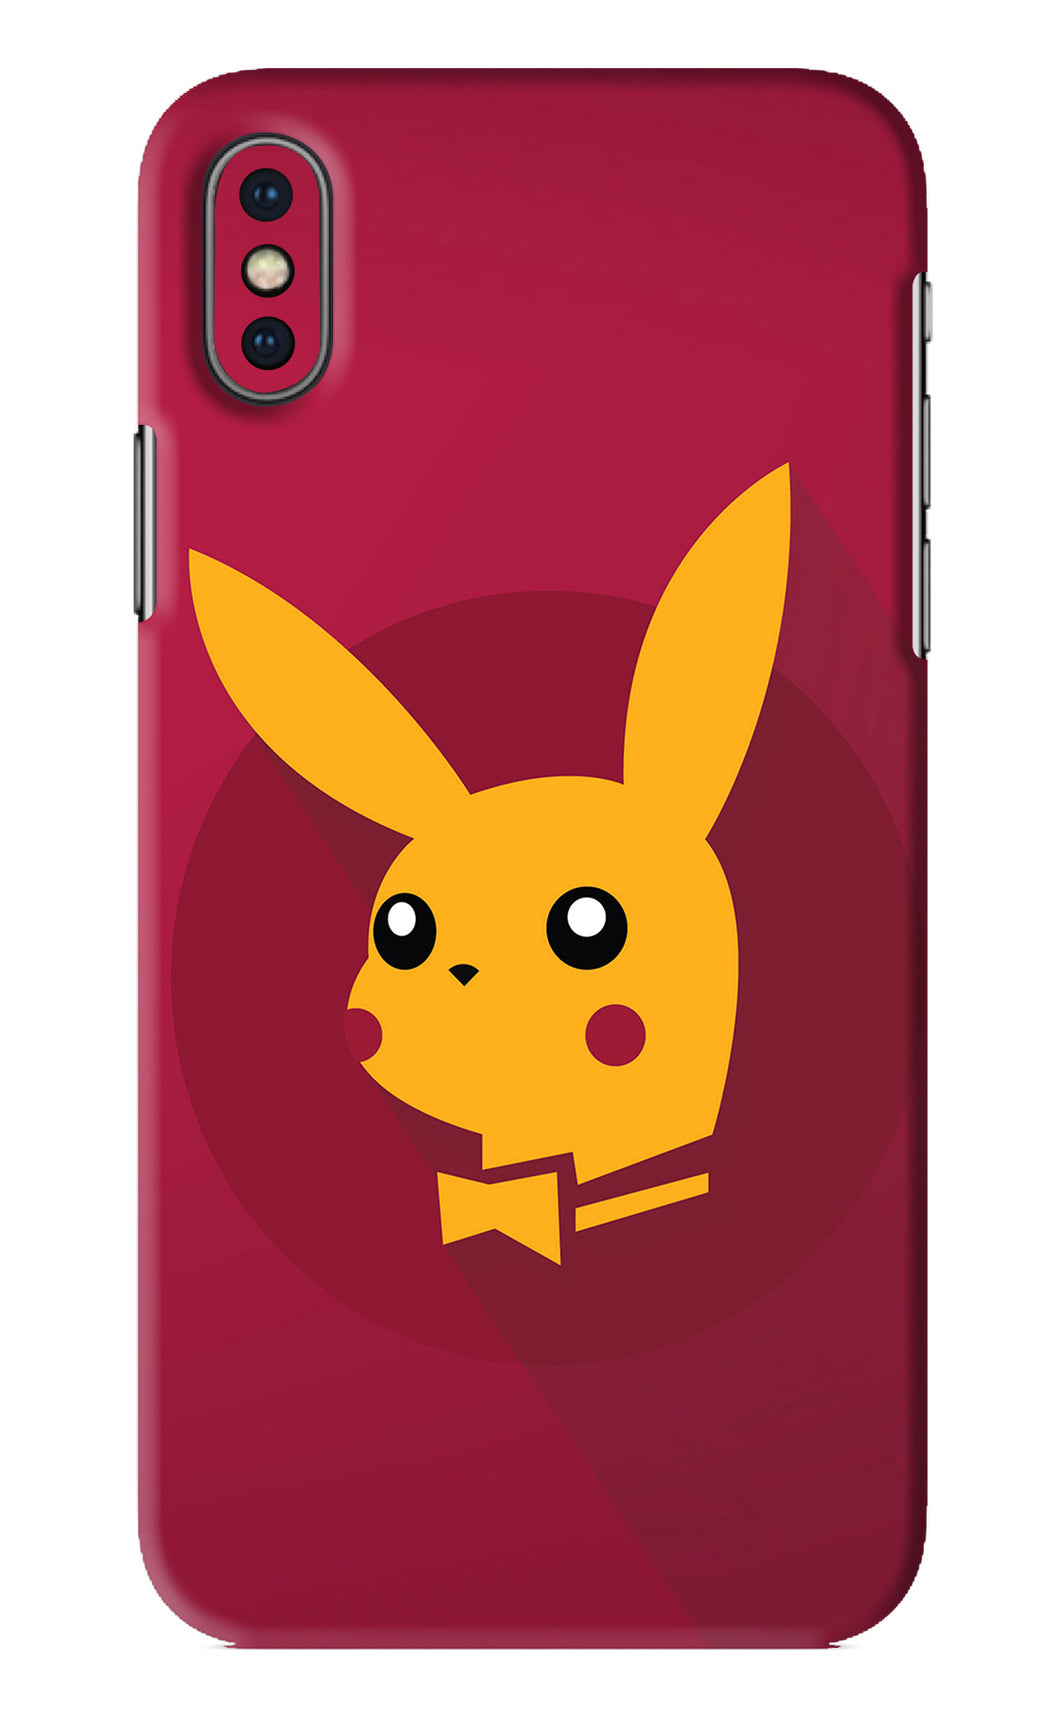 Pikachu iPhone XS Back Skin Wrap